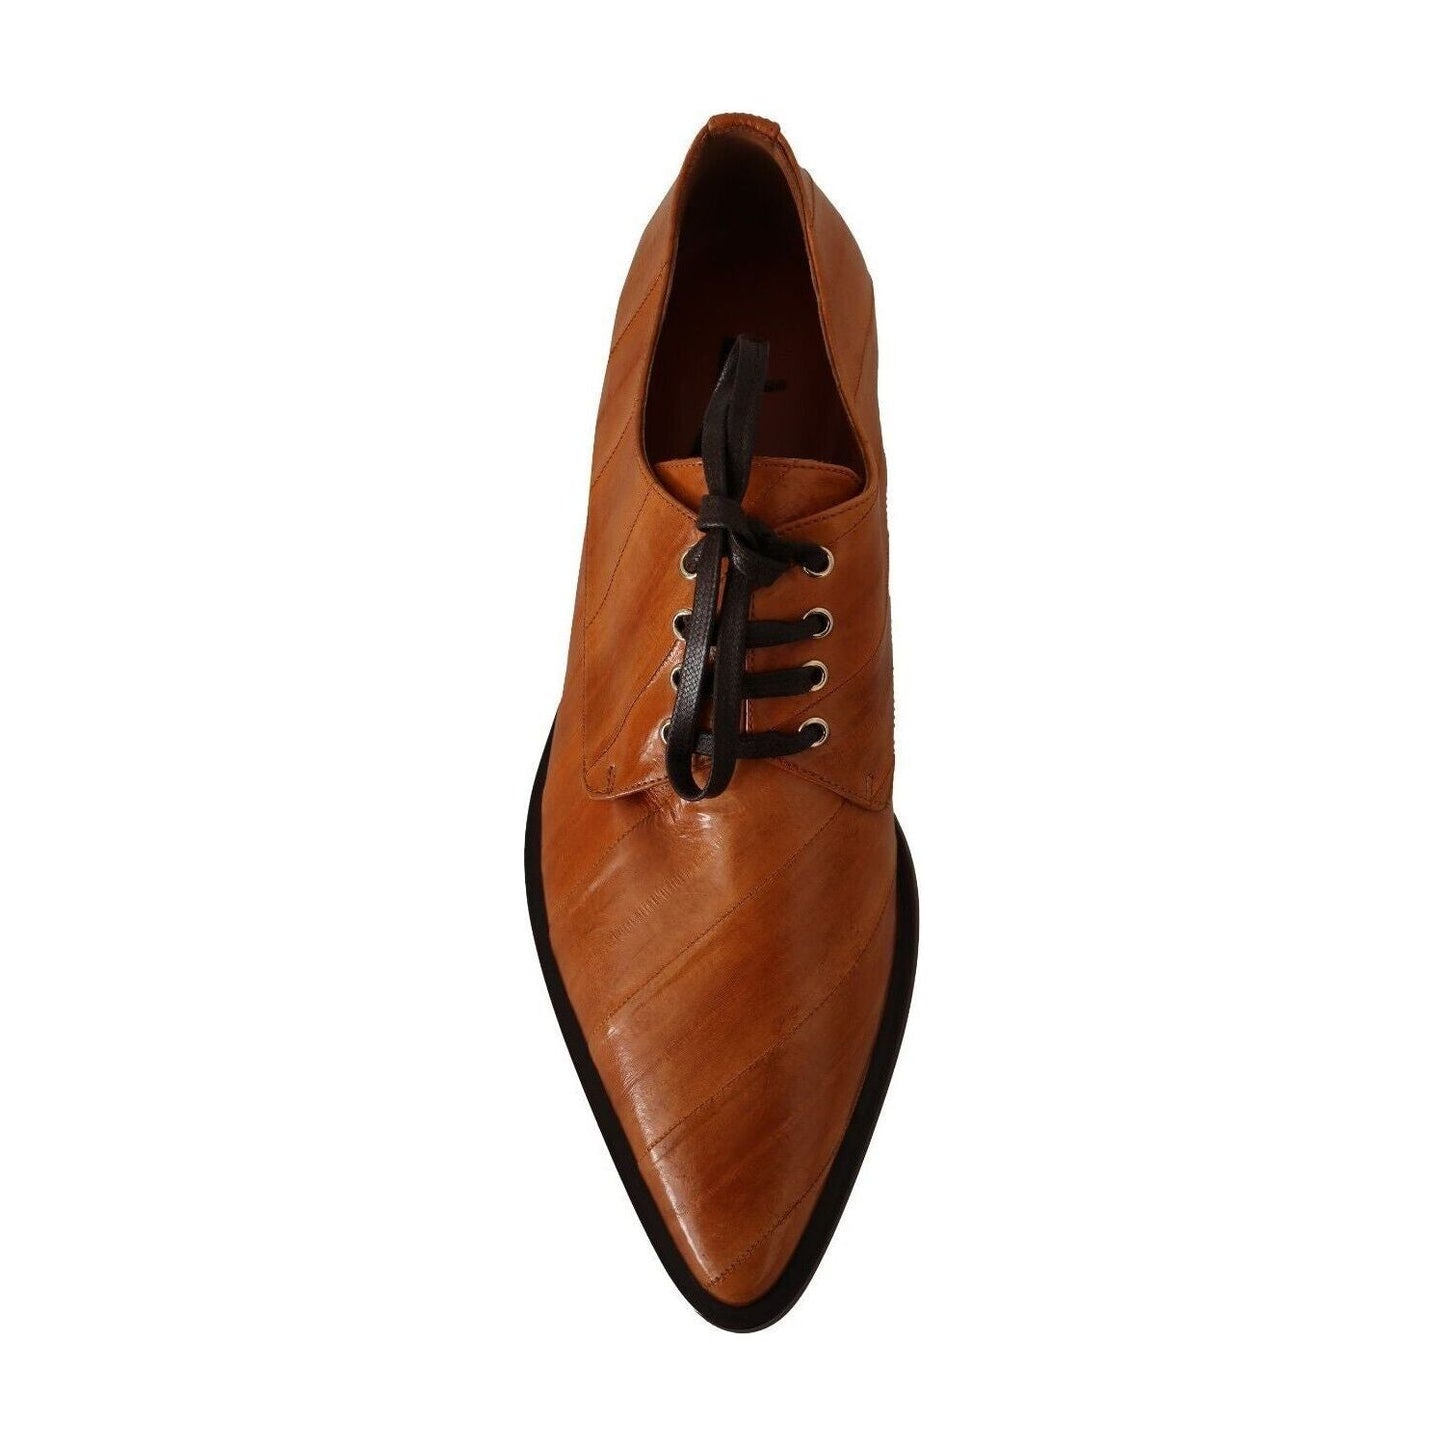 Dolce & Gabbana Elegant Eel Leather Lace-Up Formal Flats brown-eel-leather-lace-up-formal-shoes s-l1600-5-39-577493c3-bfa.jpg